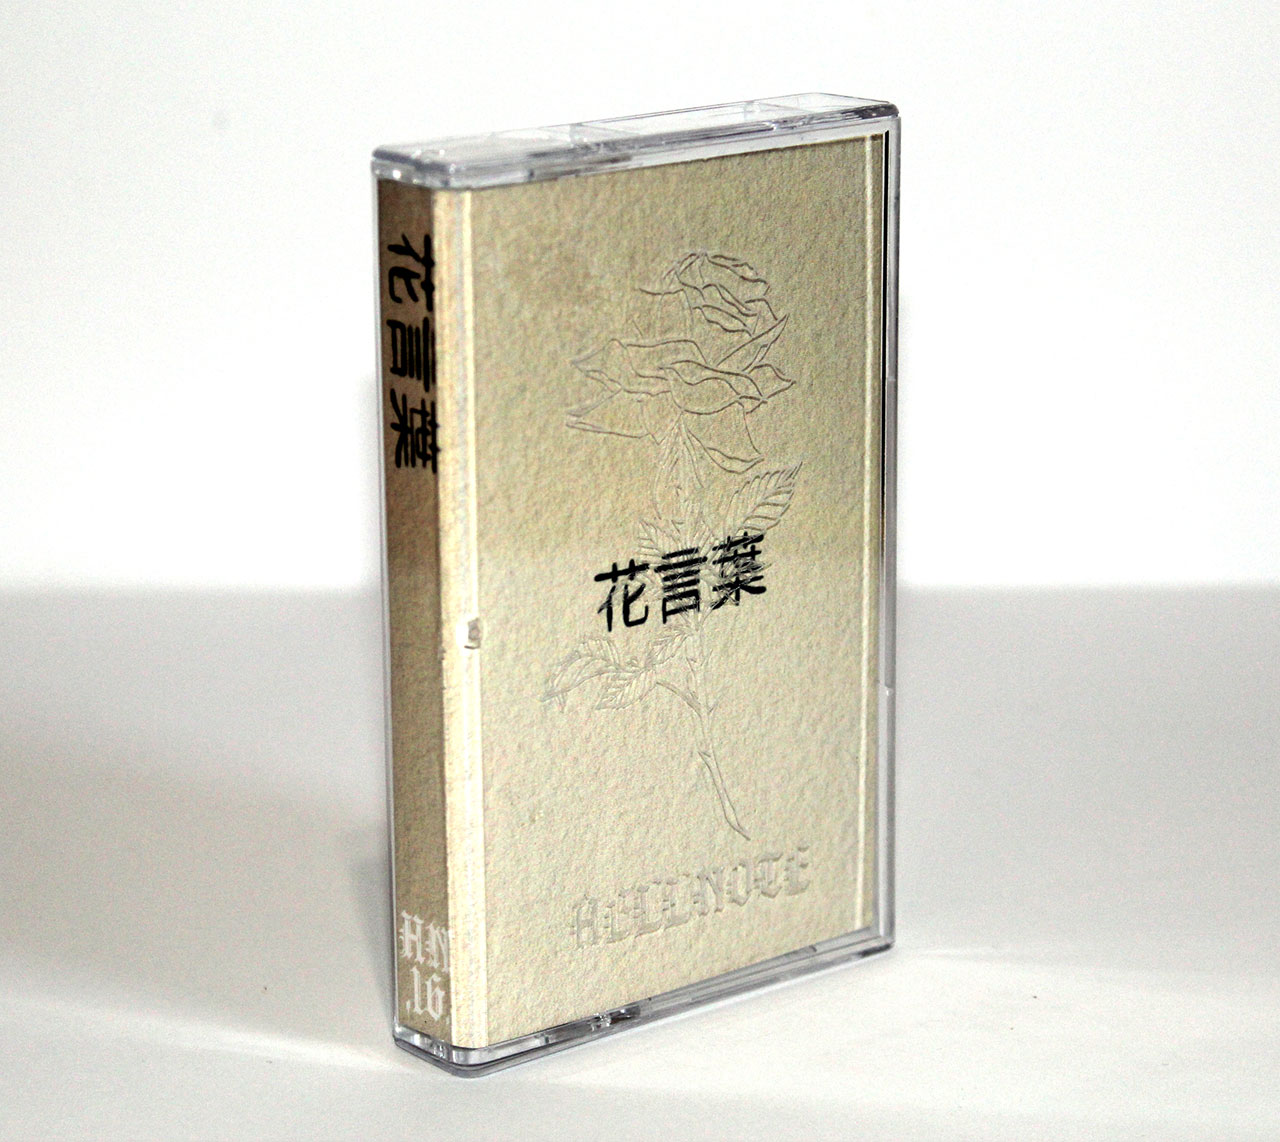 Laser engraving on clear cassette case